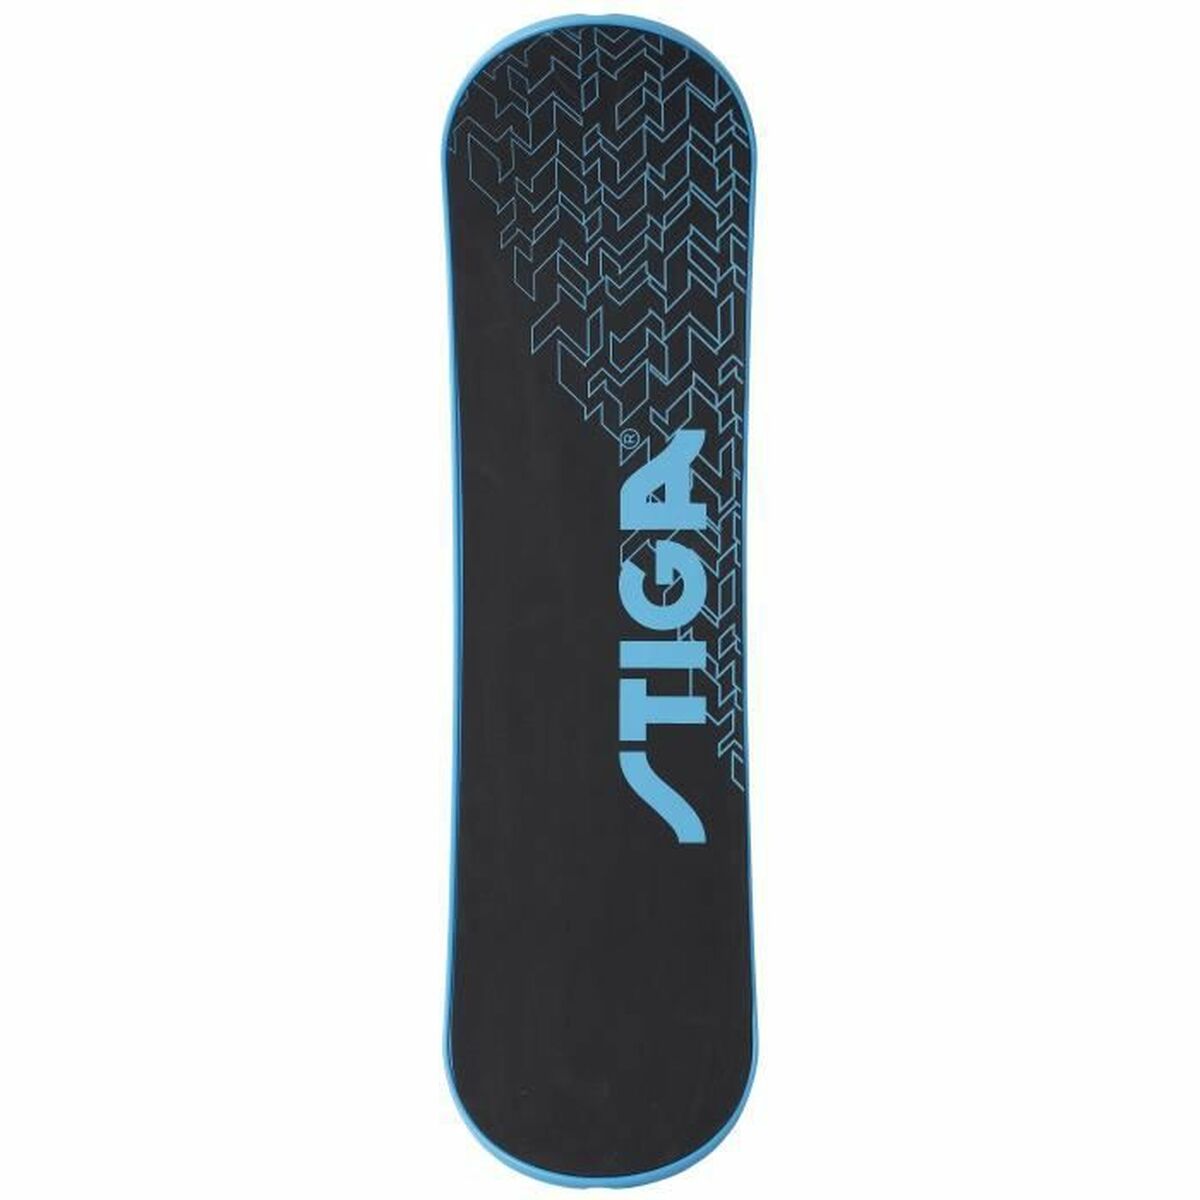 Tabla STIGA 75-1116-06 Ski 85 x 23,5 cm Blue Snowboard